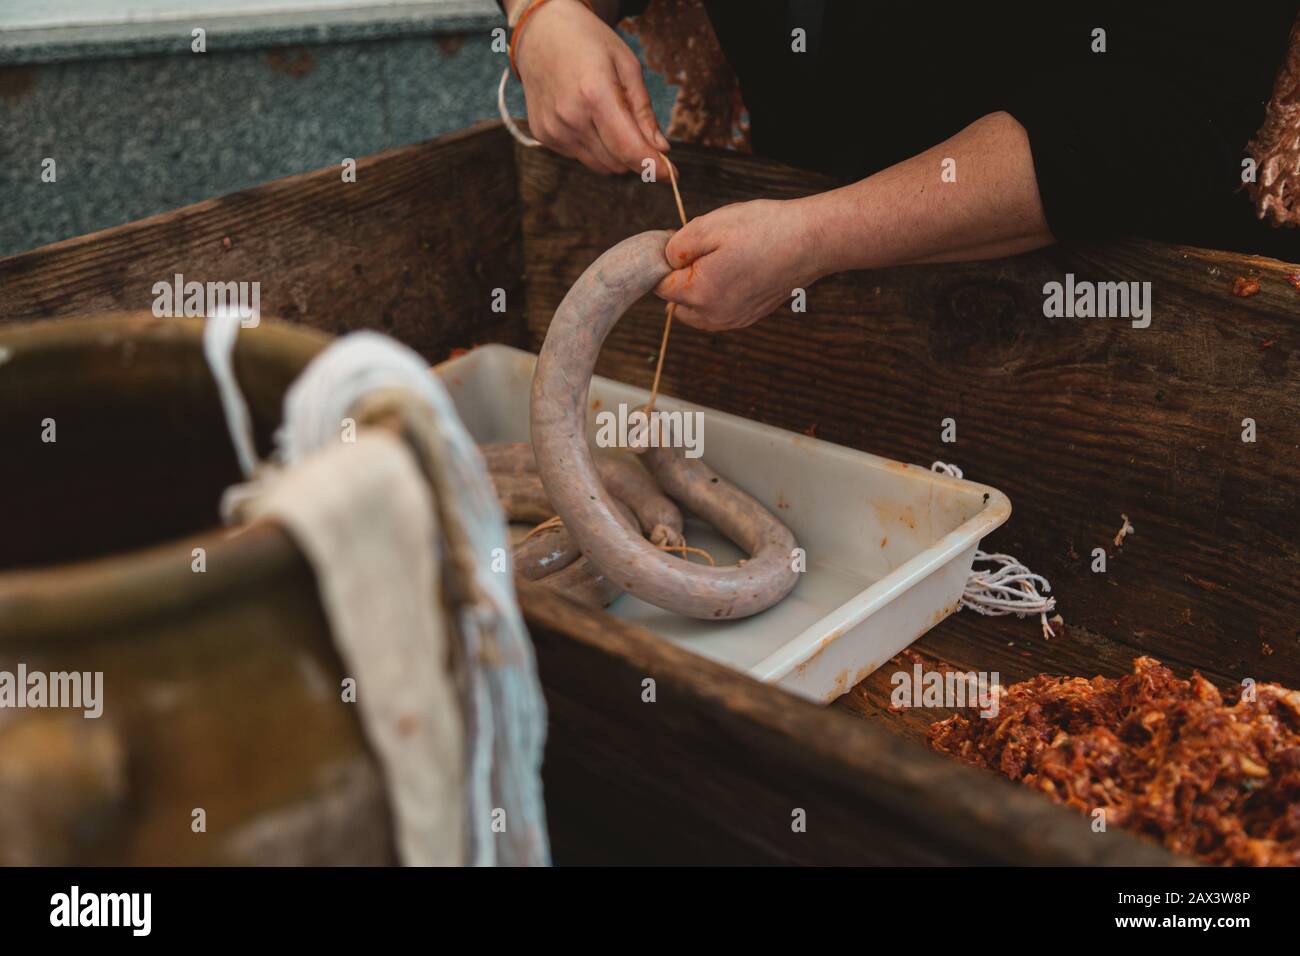 Closeup of a person preparing a raw kielbasa in a wooden pot under the lights Stock Photo